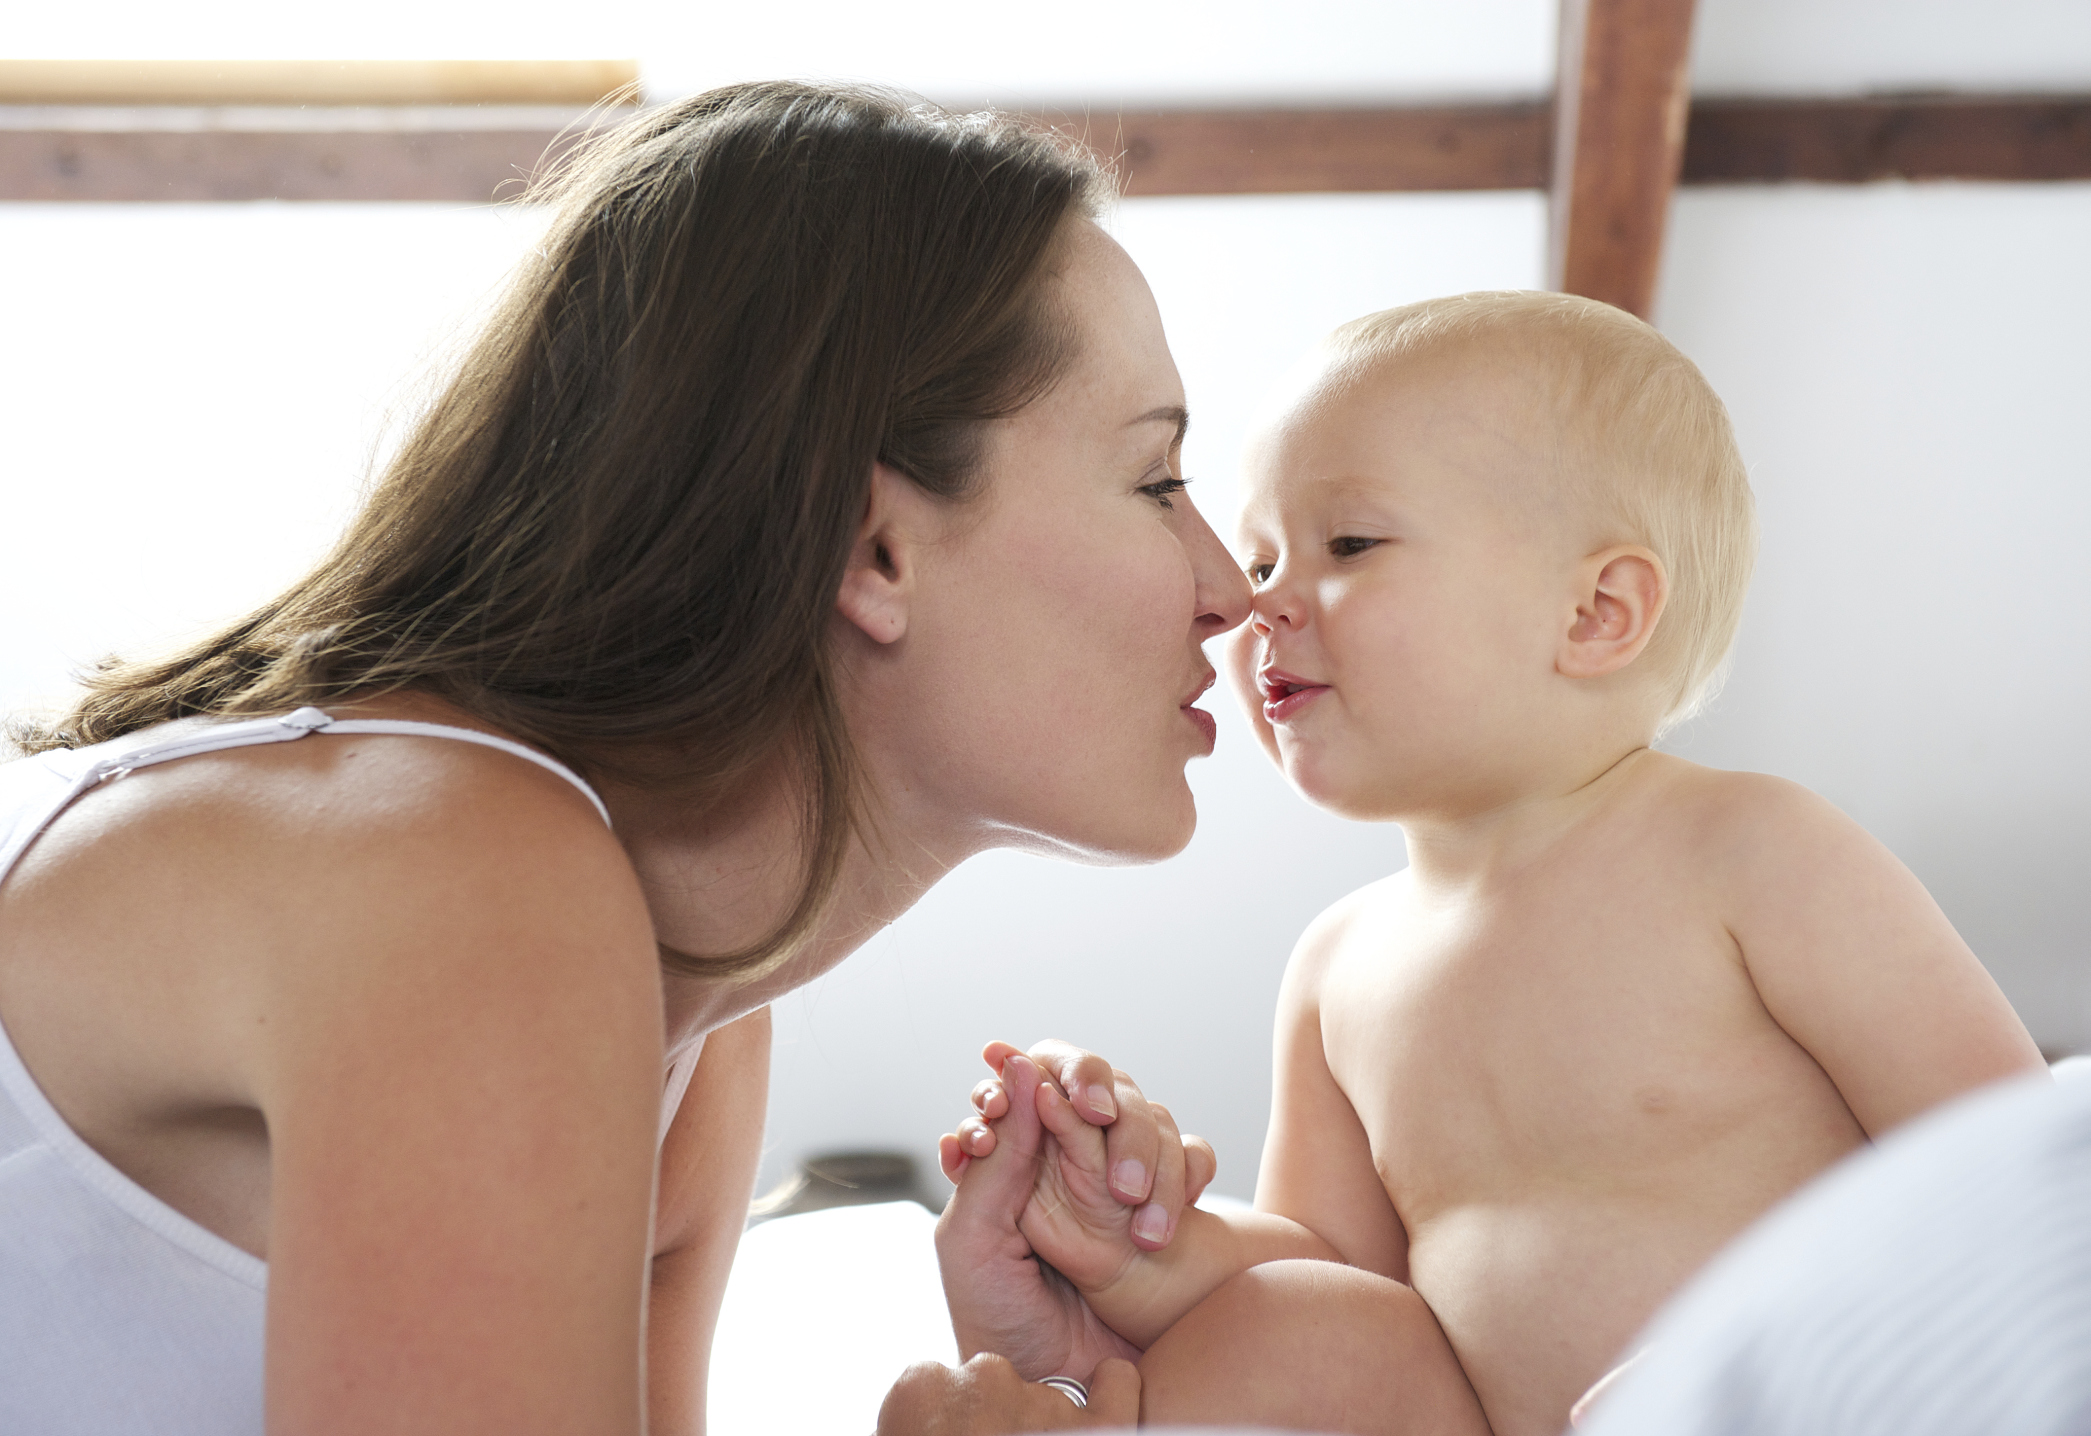 Debunking 5 More Crazy Breastfeeding Myths You’ve Probably Heard